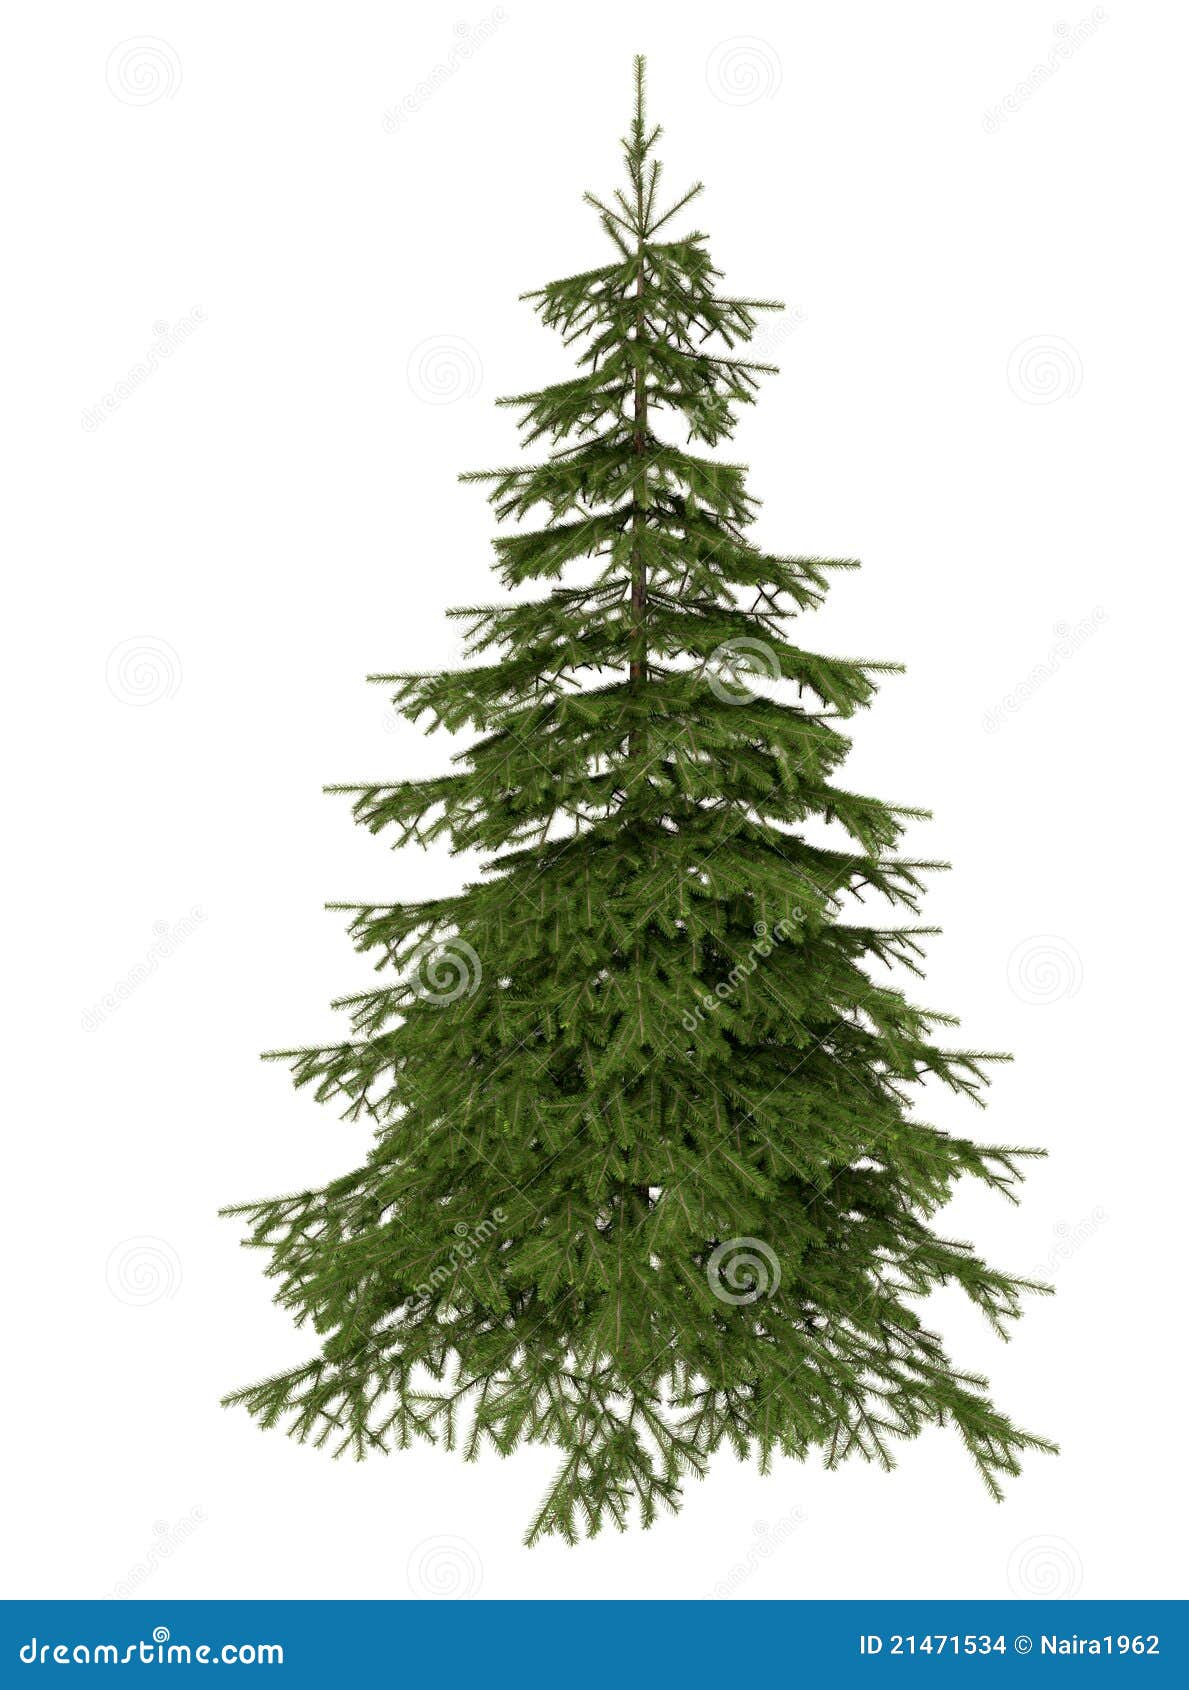 clipart spruce tree - photo #29